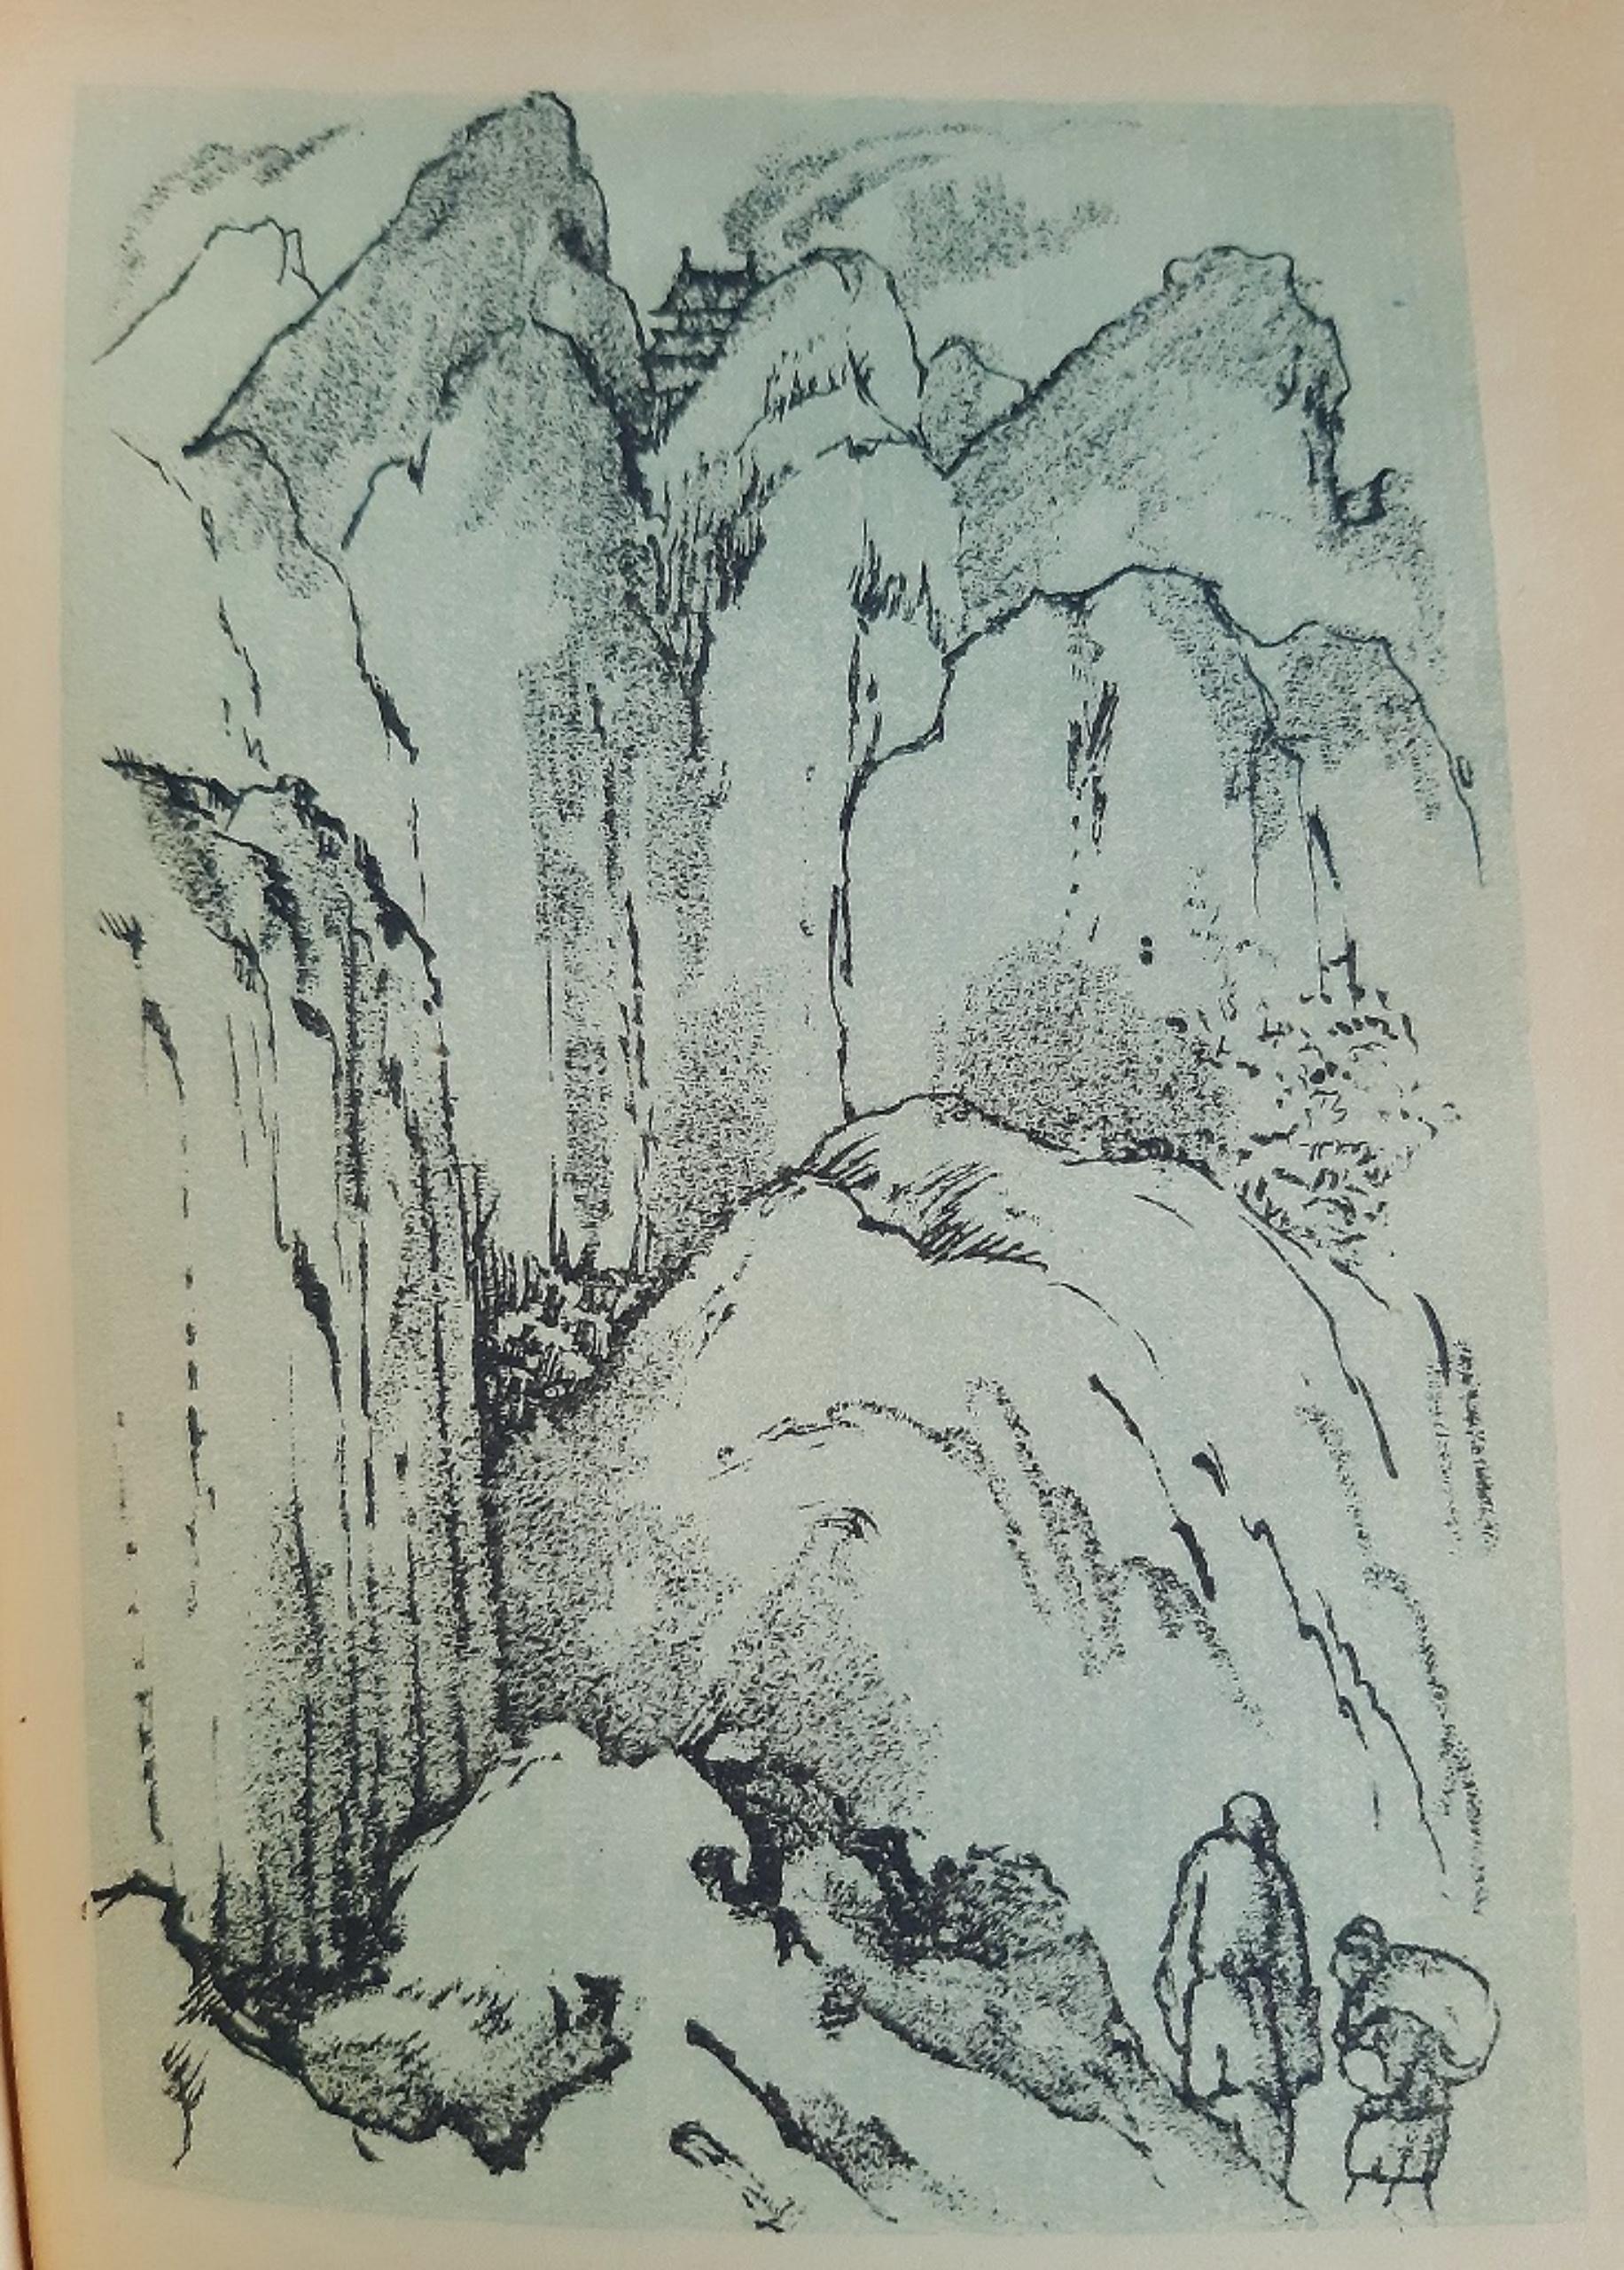 Chinesische Abende - Vintage Rare Book Illustrated by Emil Orlik - 1920 For Sale 2